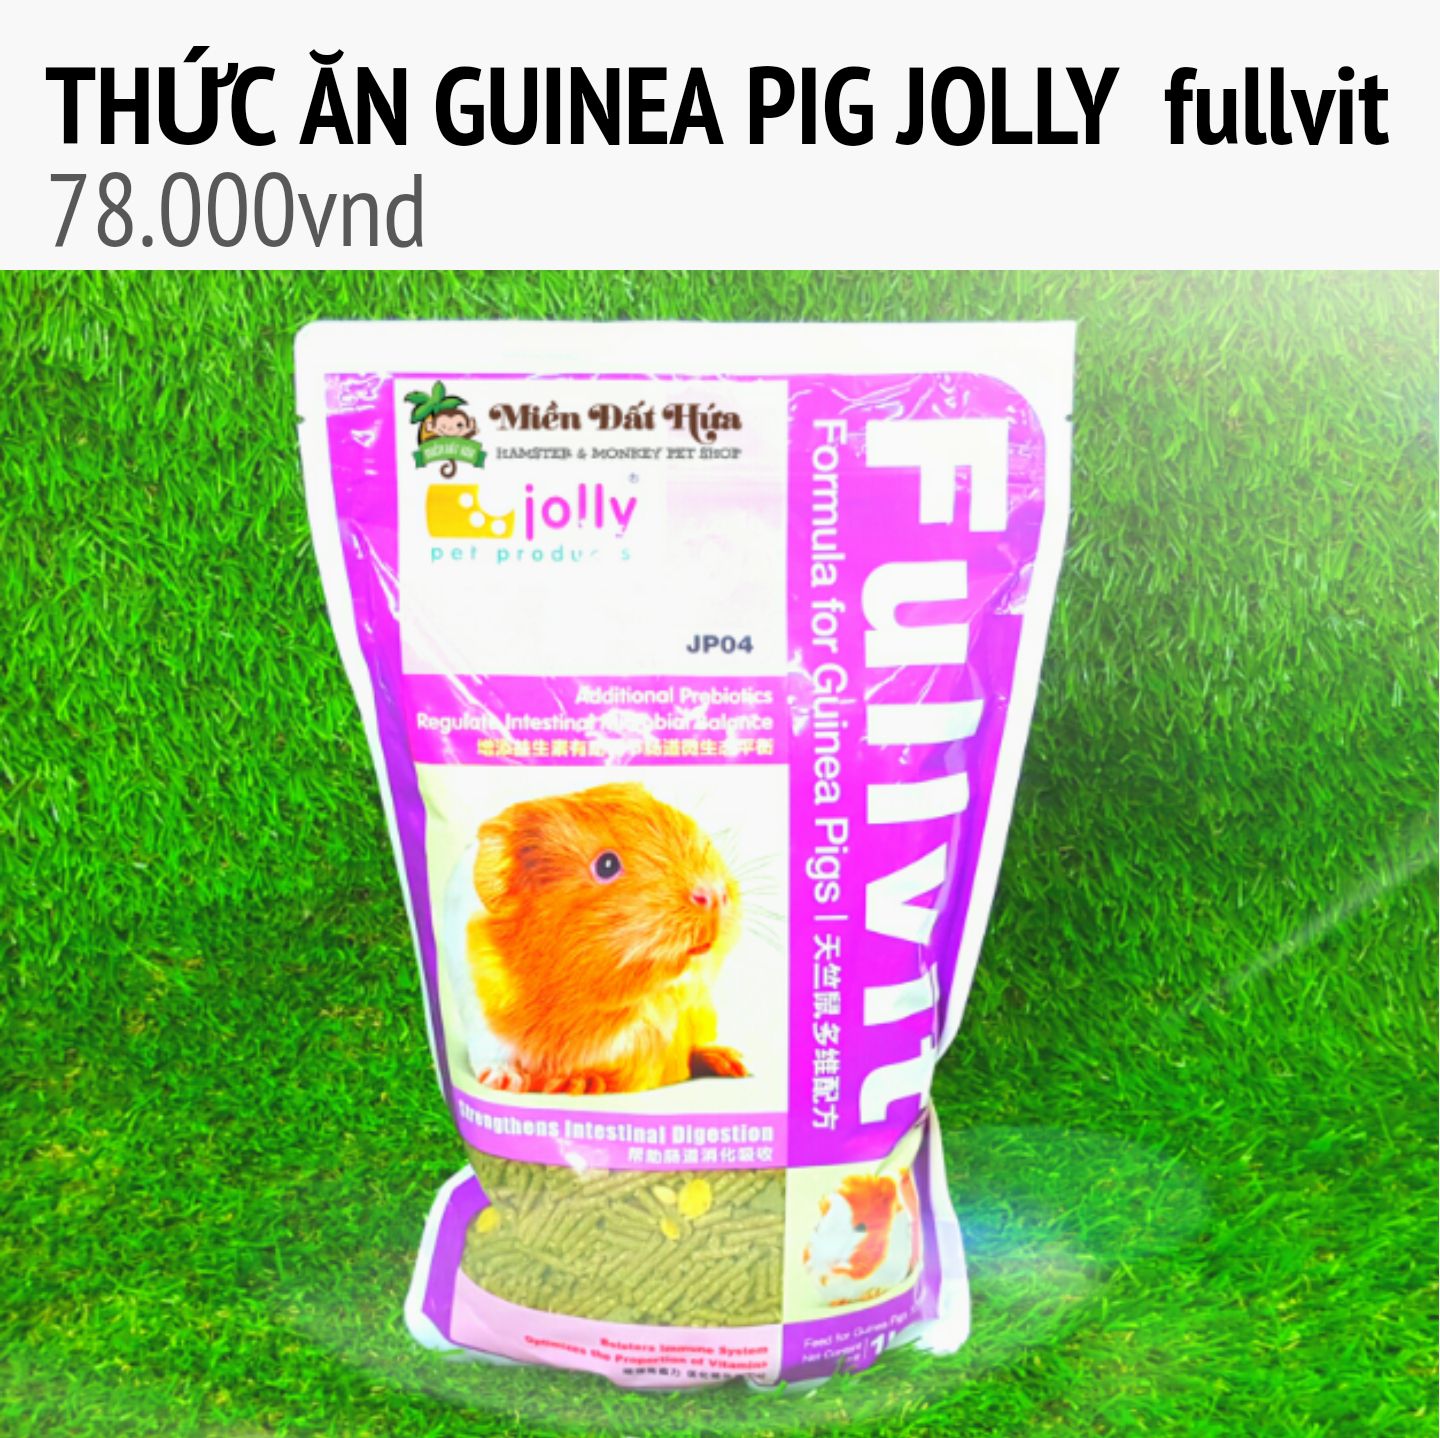 Pellet guinea pig fullvit jolly chính hãng 1kg